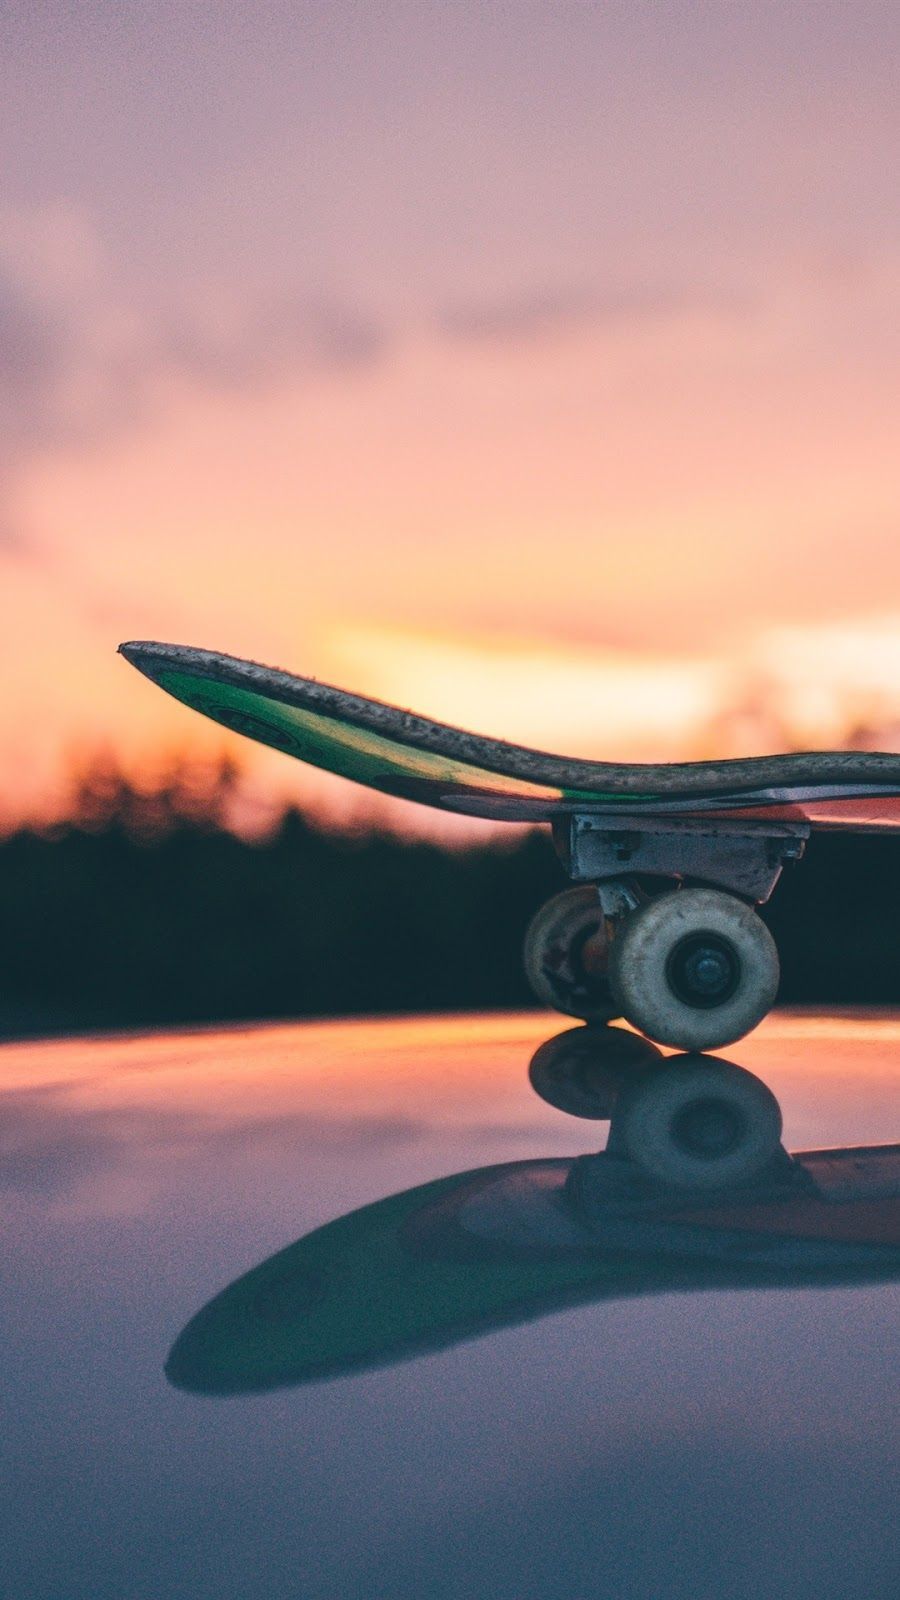 Skateboard Wallpaper iPhone